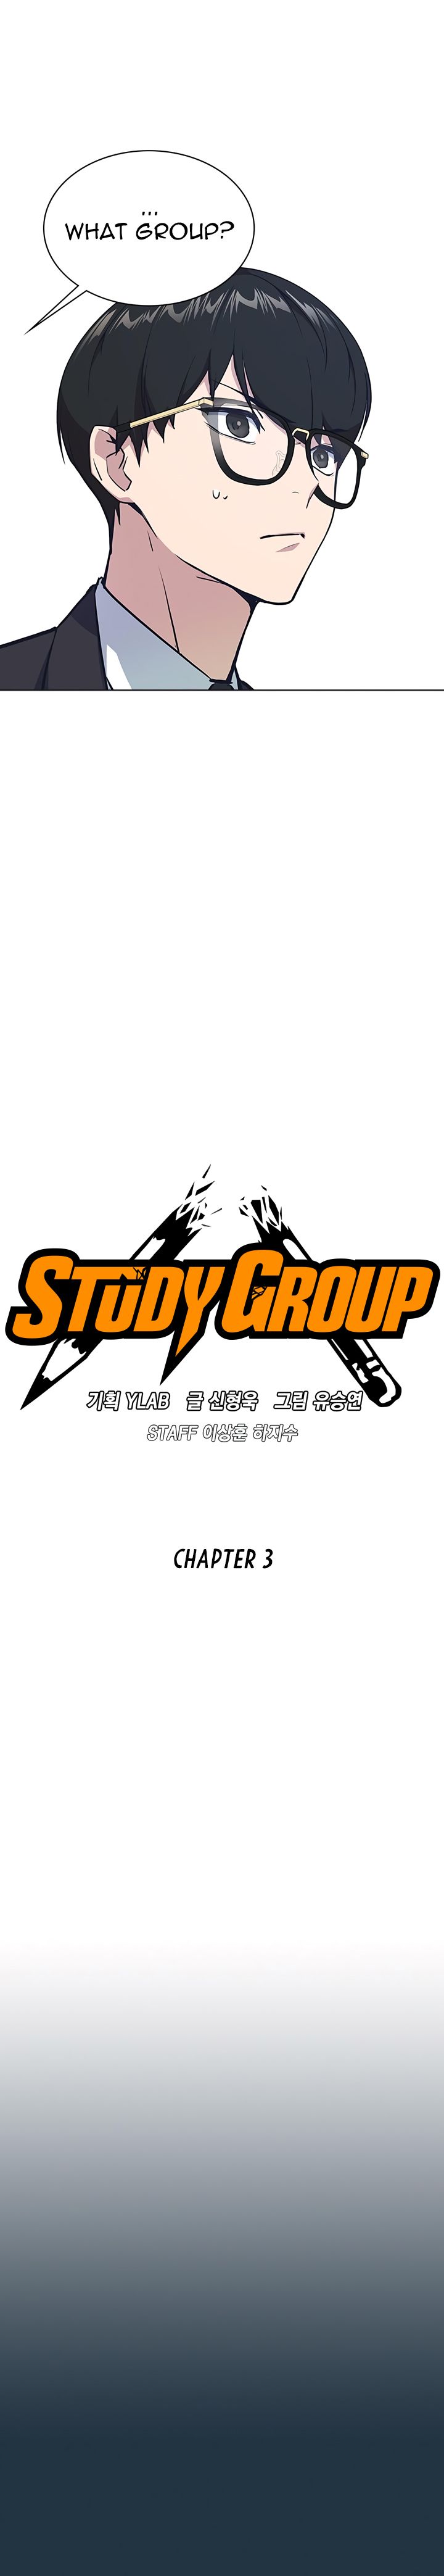 study_group_3_3